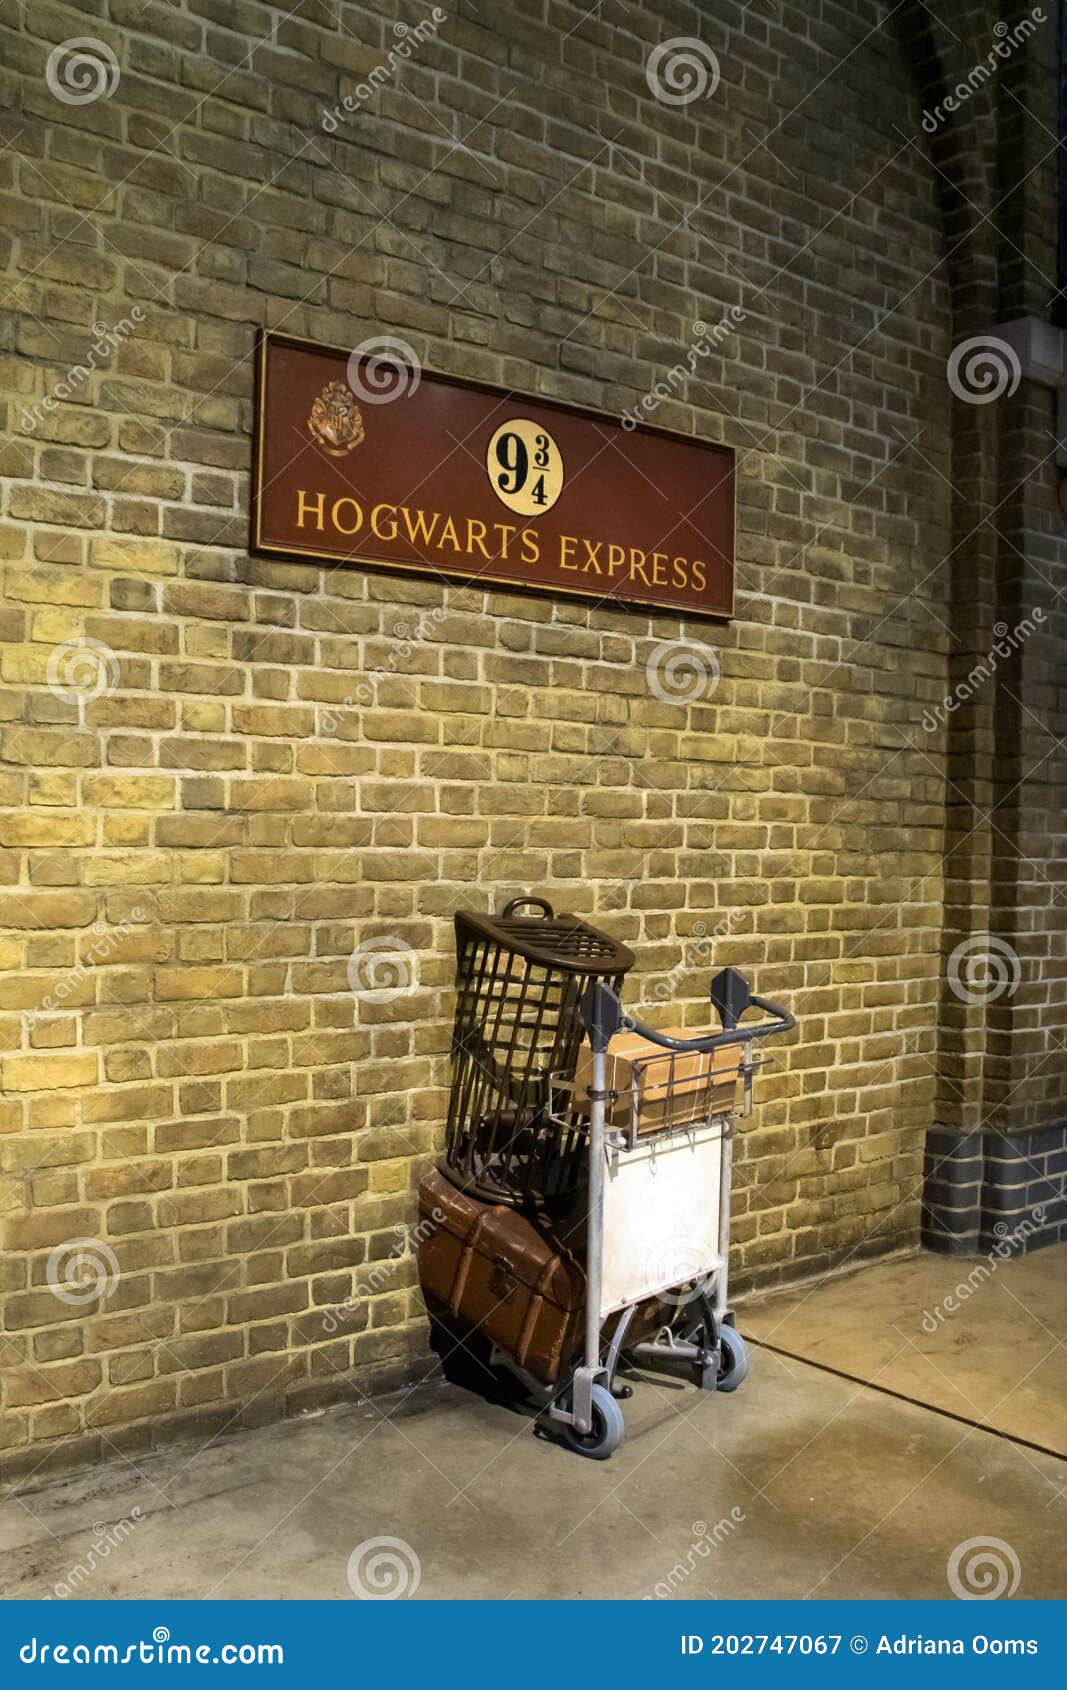 Harry Potter Teppich Platform 9 3/4 100 x 100 cm